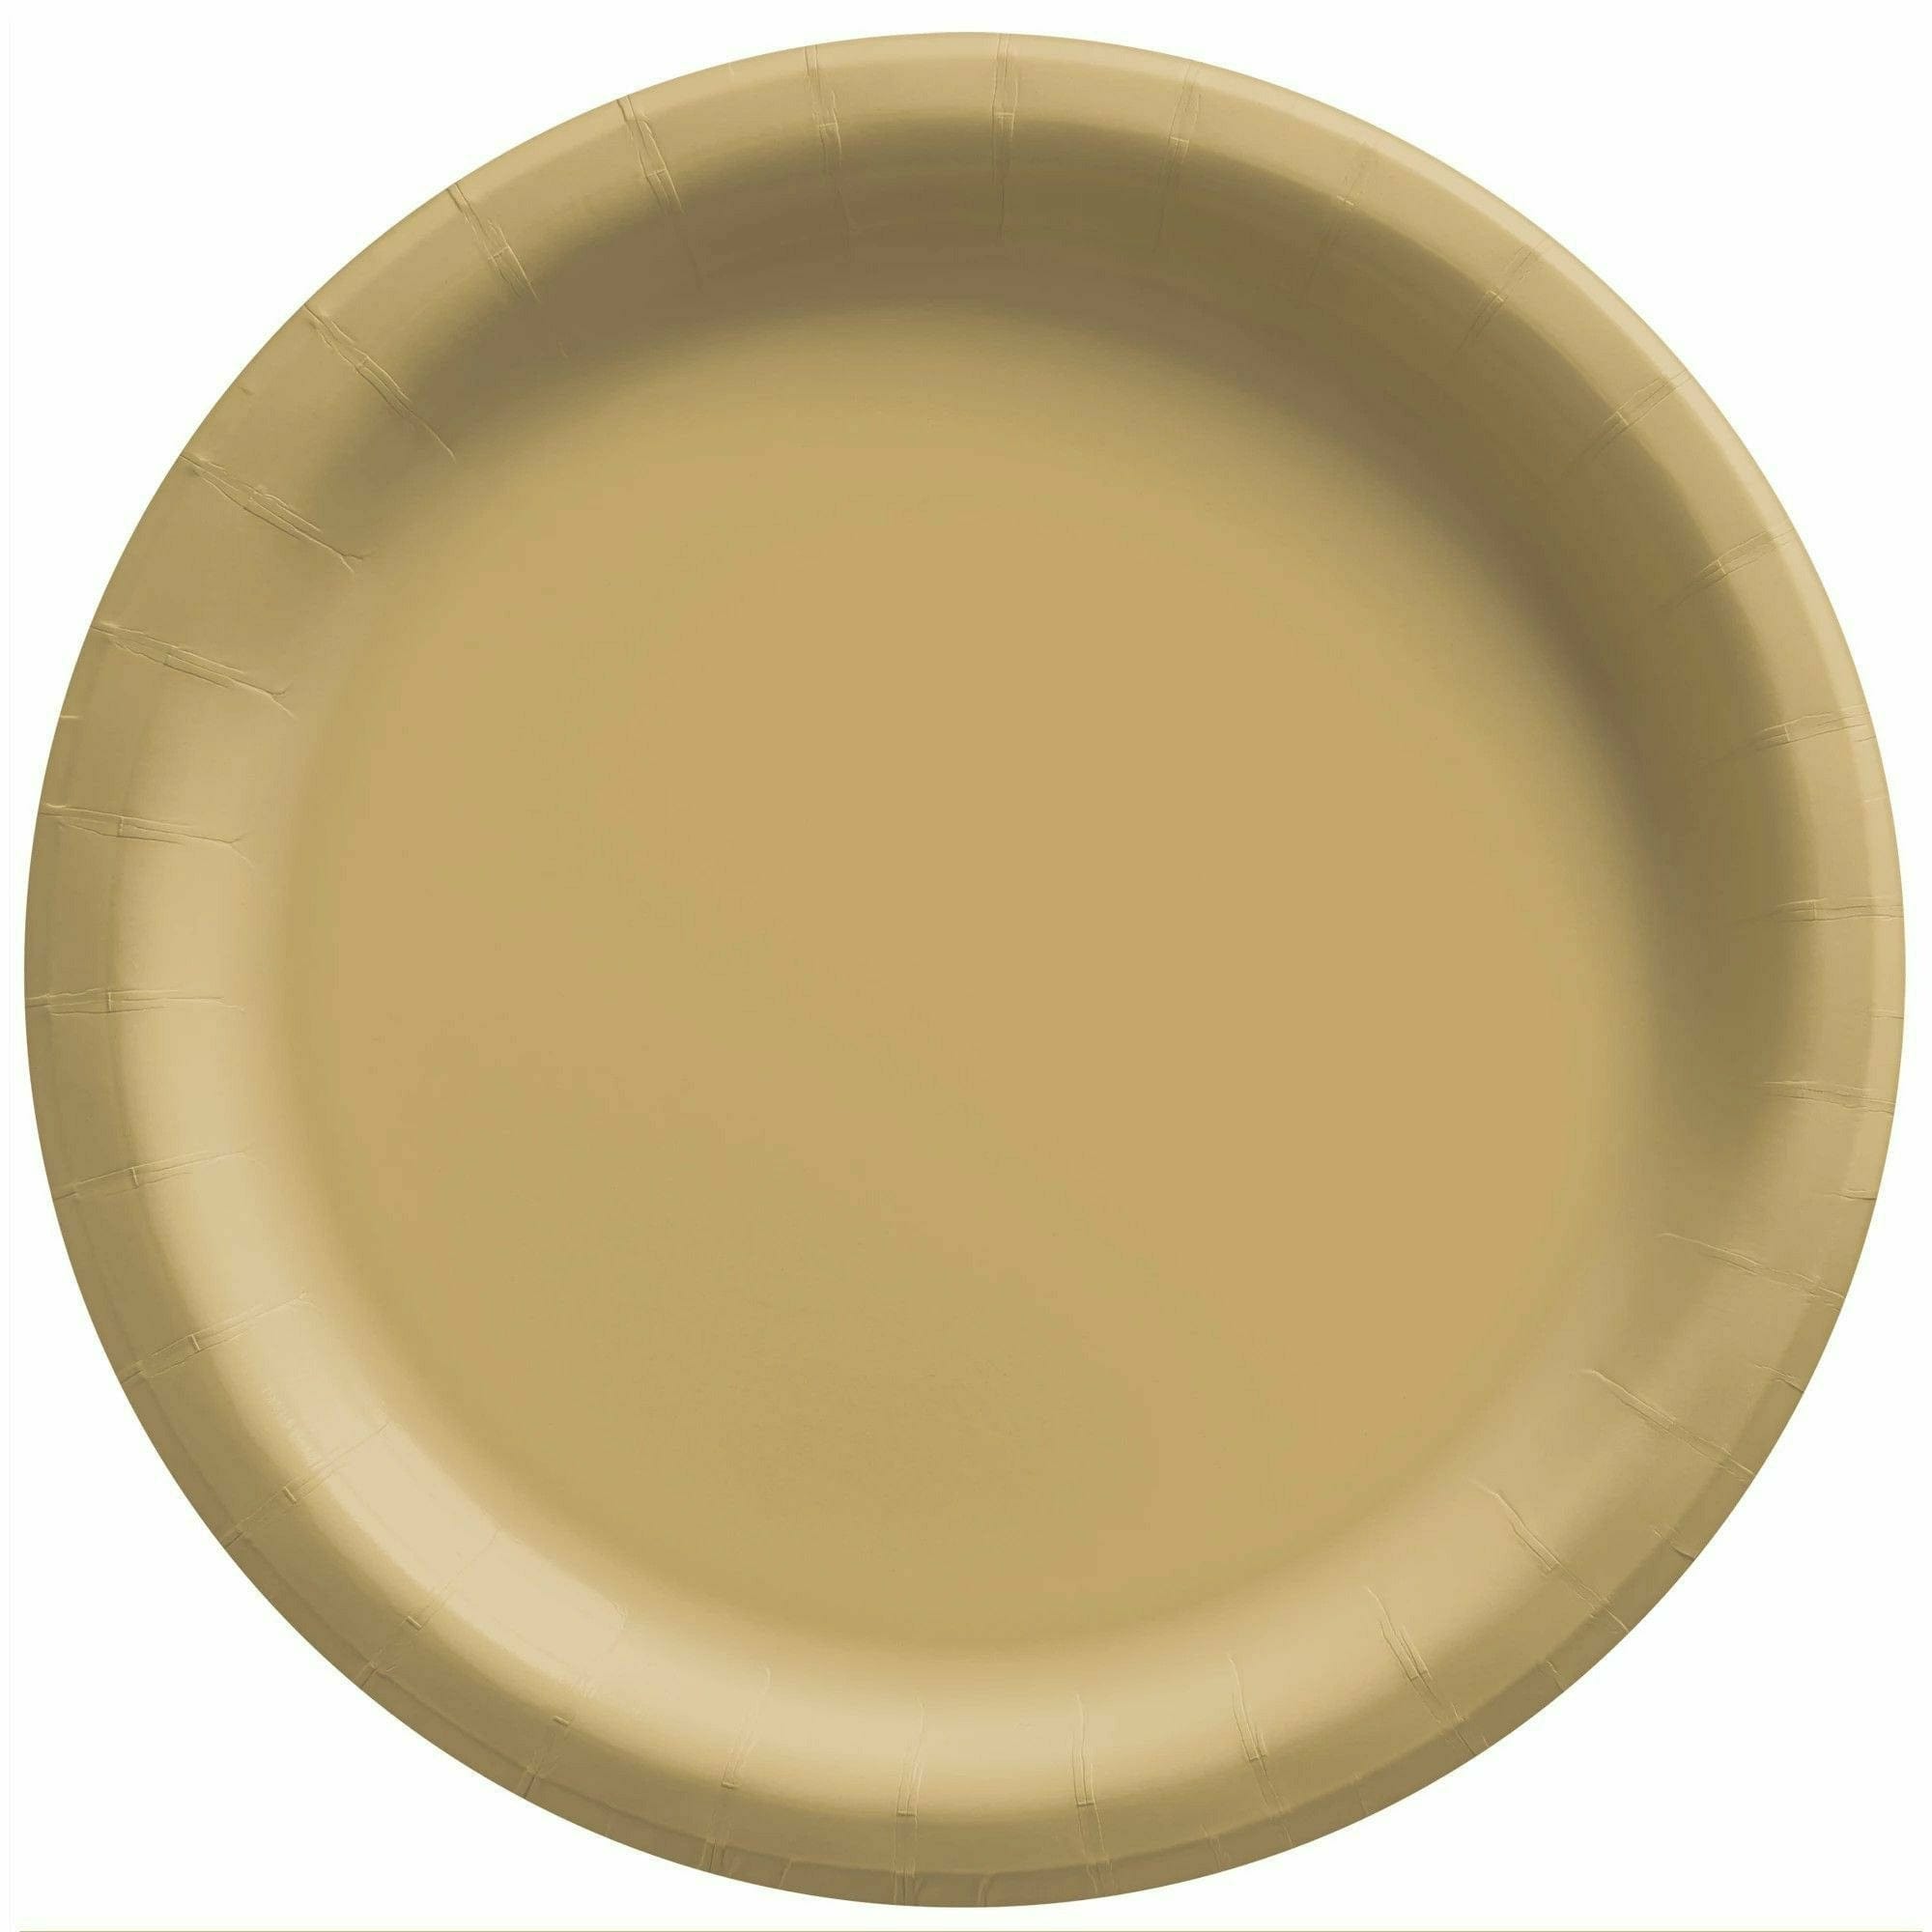 Amscan BASIC Gold - 6 3/4" Round Paper Plates, 50 Ct.